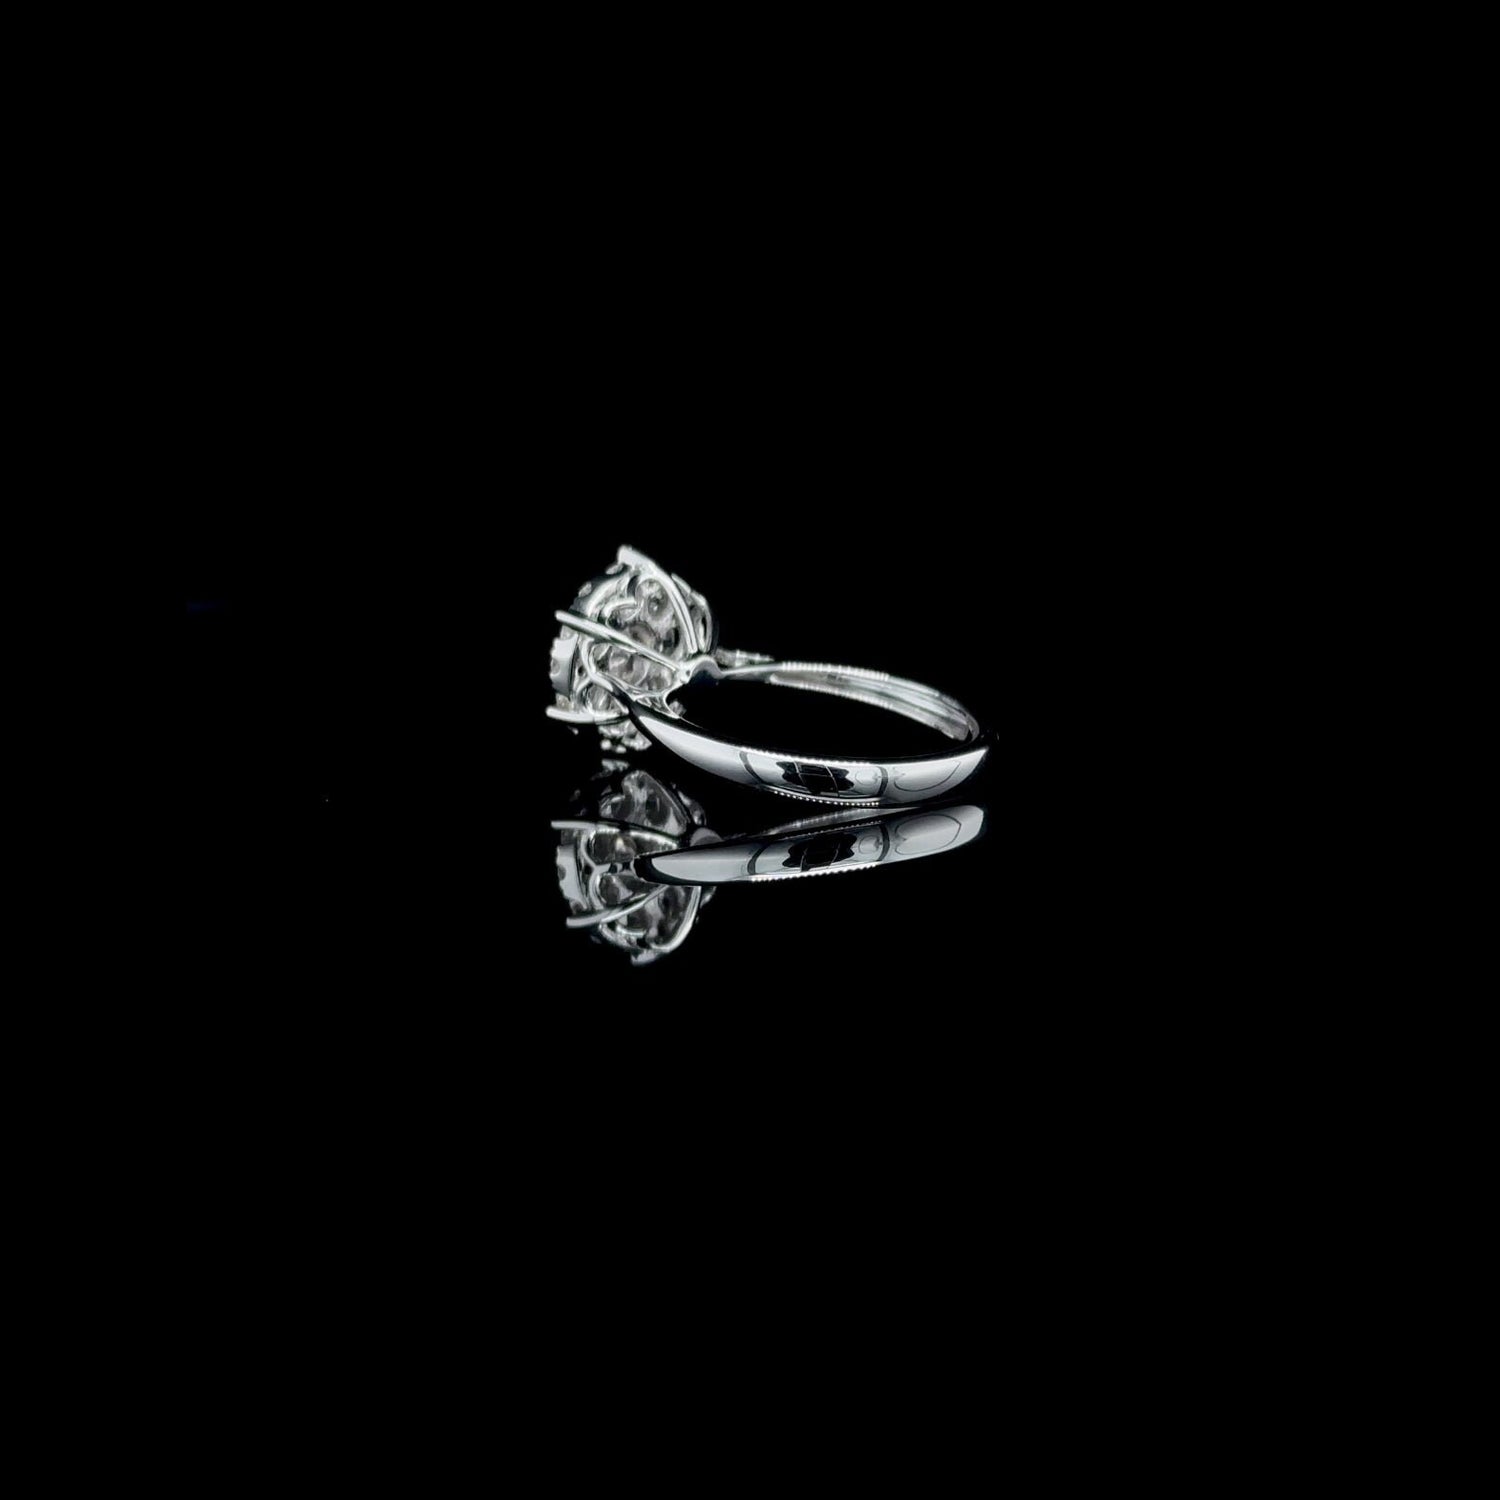 14K White Gold 1.07 CT Natural Diamond Cluster Round Flower Ring